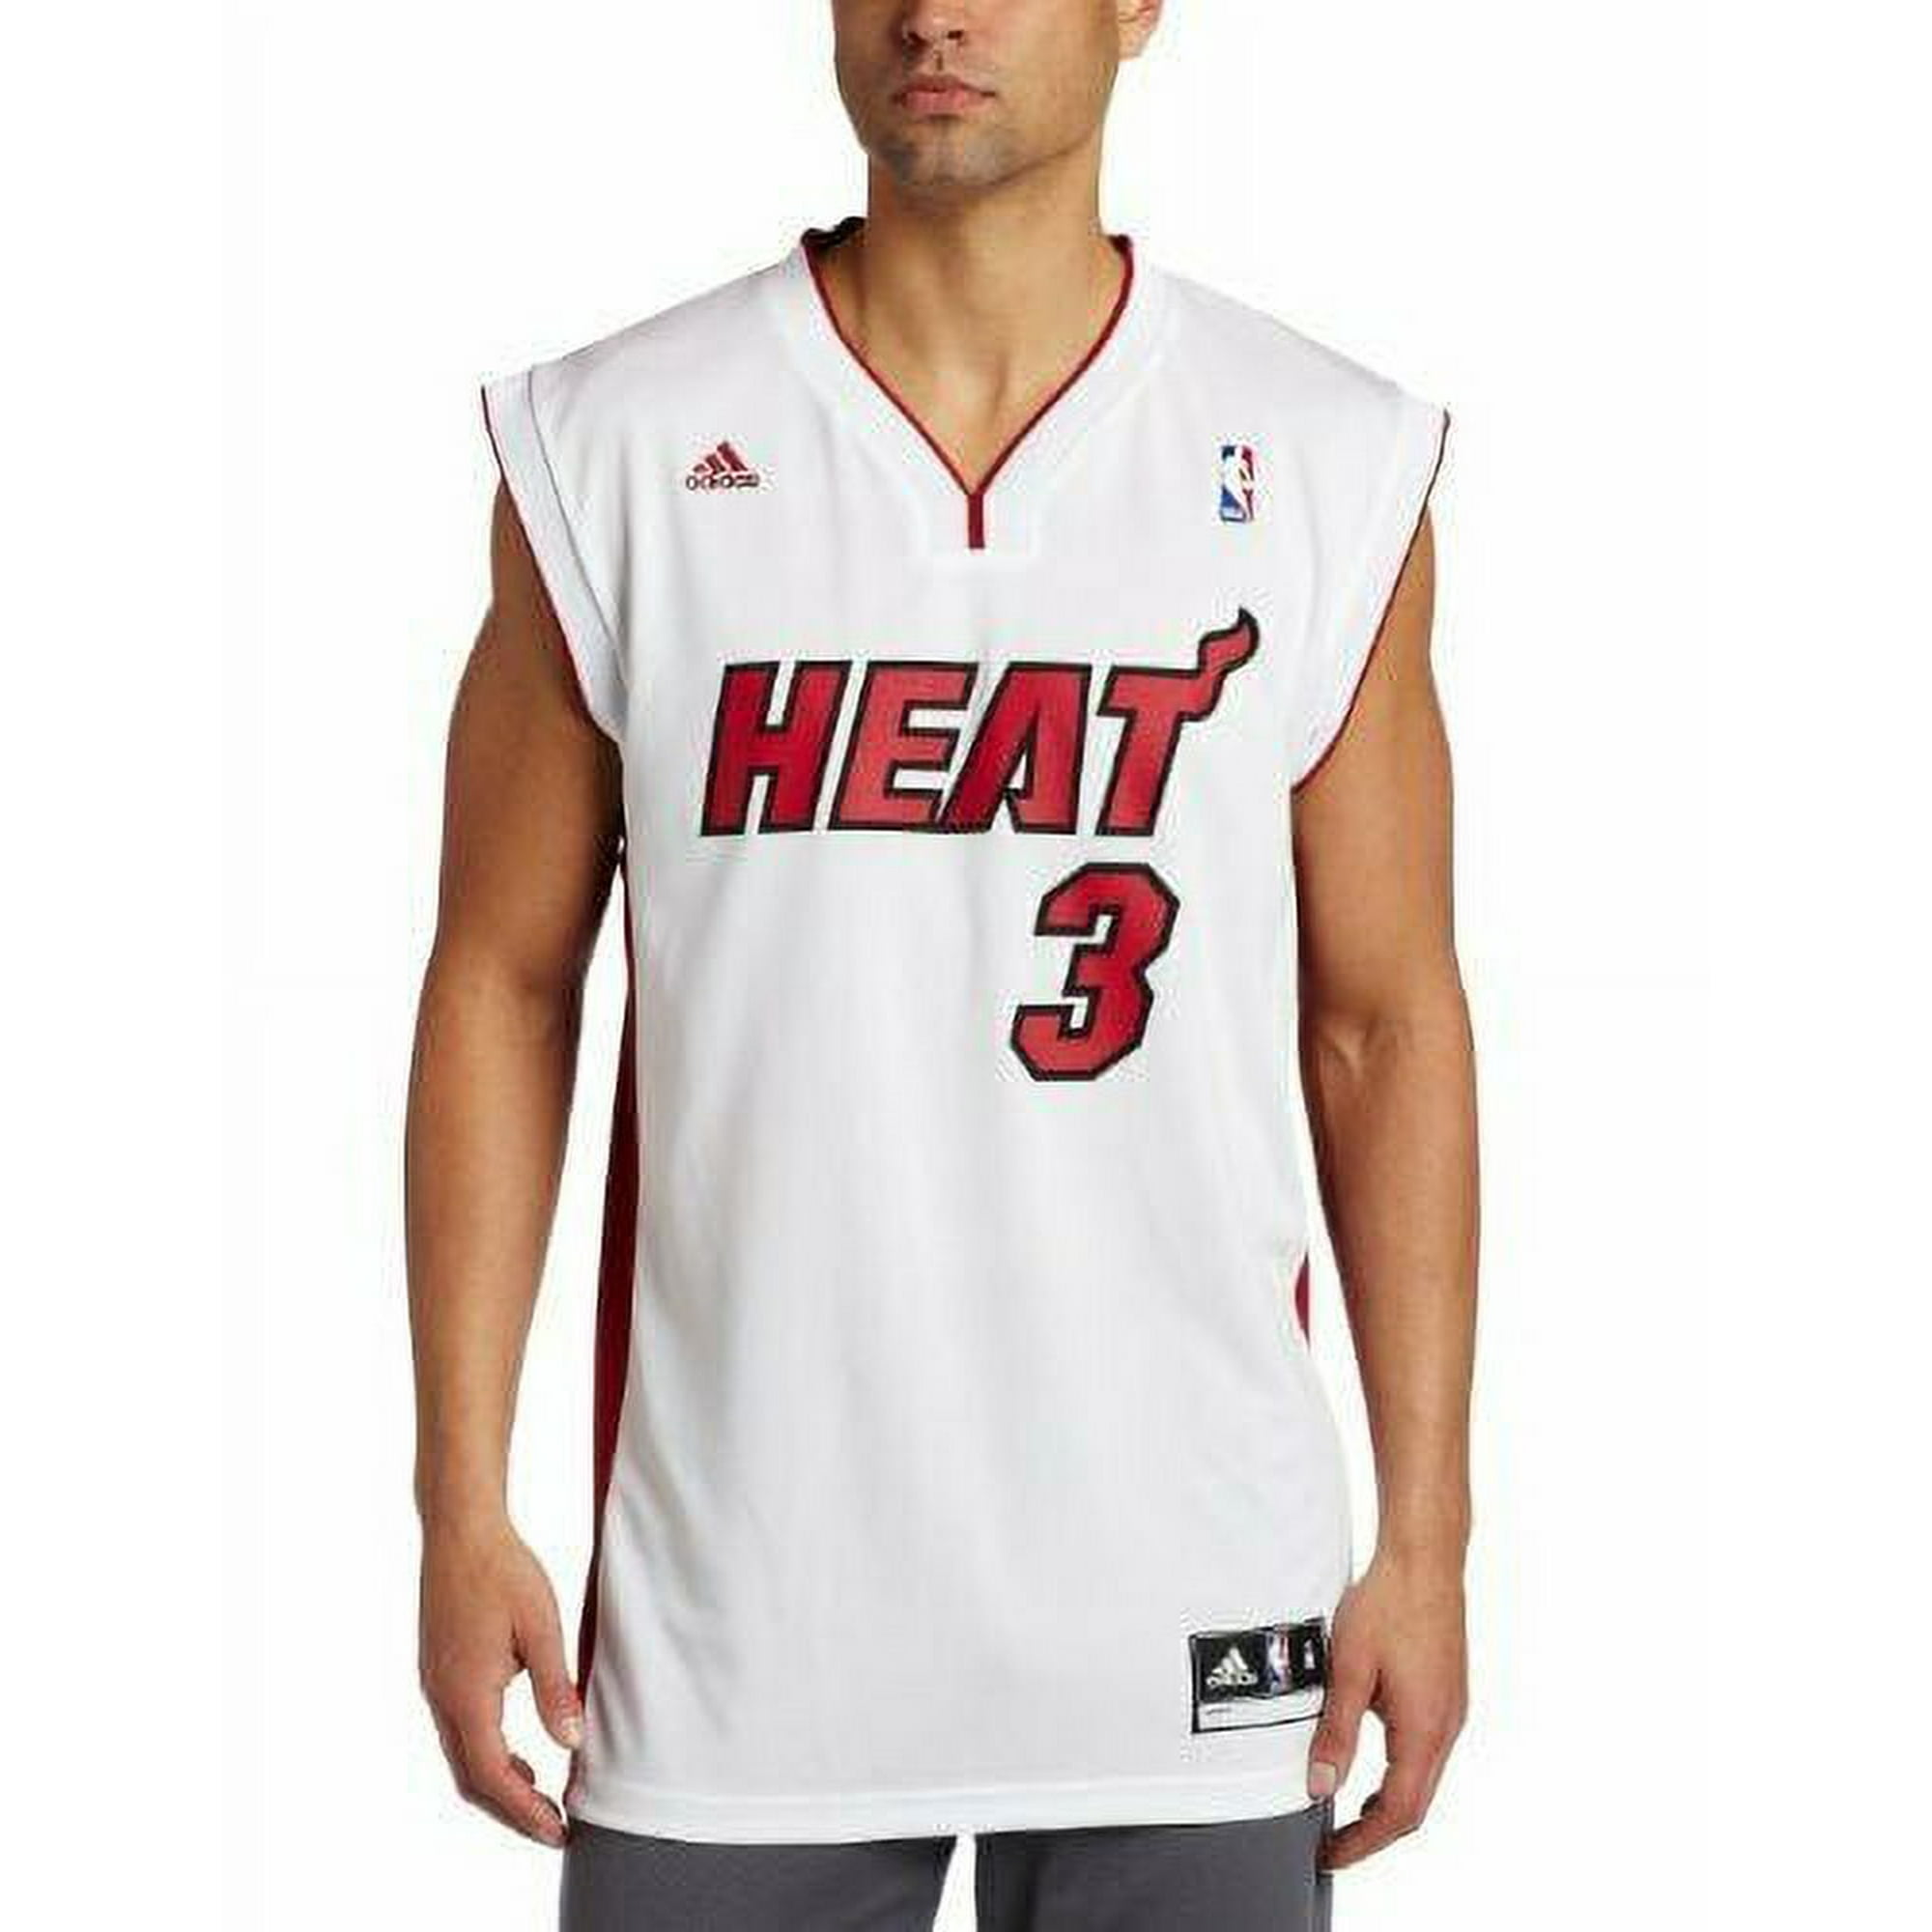 Dwayne Wade White Miami Vice Heat Jersey Size 44. Men's Large. Stitched